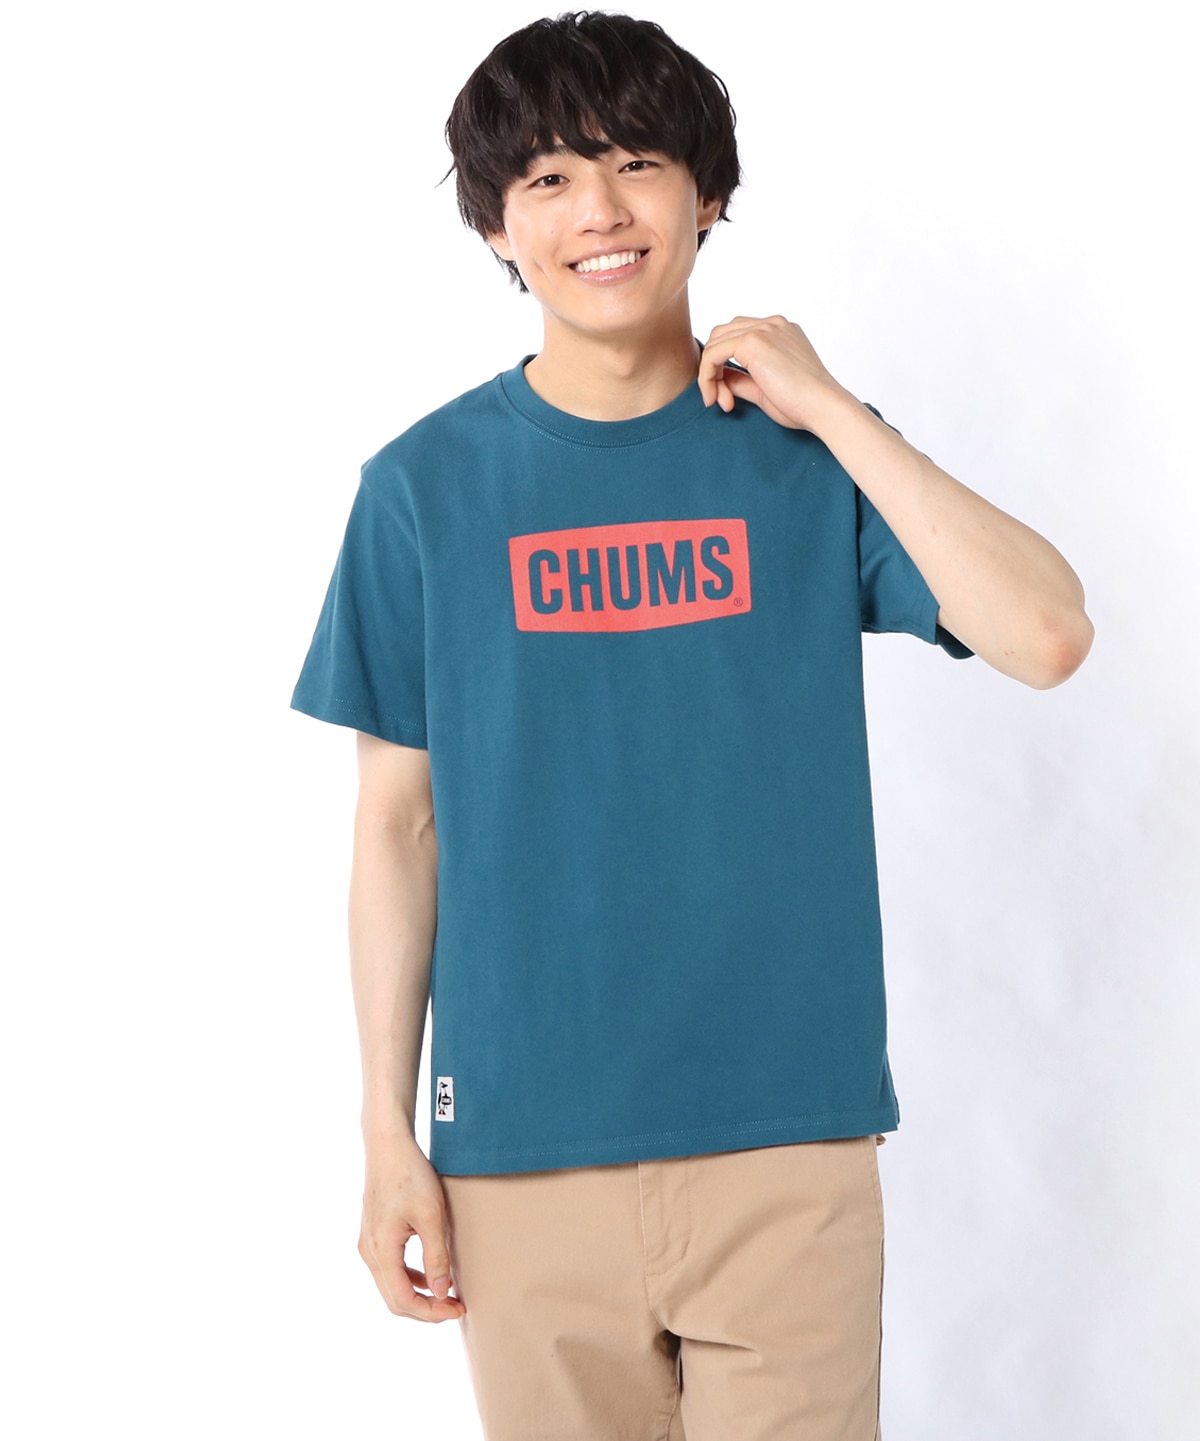 CHUMS Logo T-Shirt/チャムスロゴTシャツ(トップス/Tシャツ)(M Teal Blue): トップス|CHUMS(チャムス )|アウトドアファッション公式通販